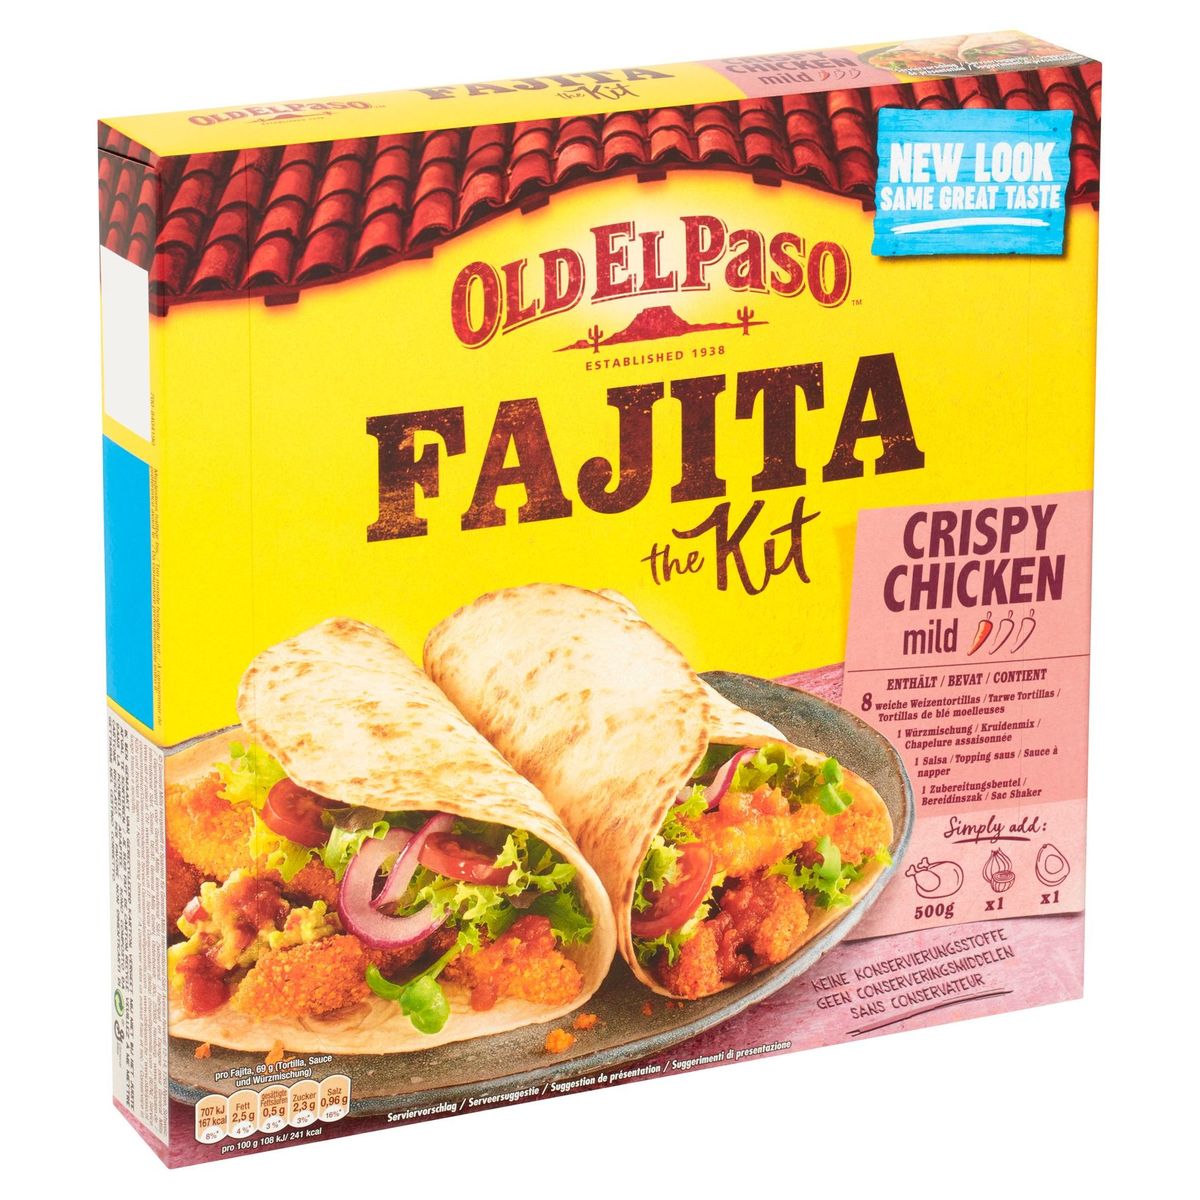 Old El Paso Fajita the Kit Crispy Chicken Mild 555 g